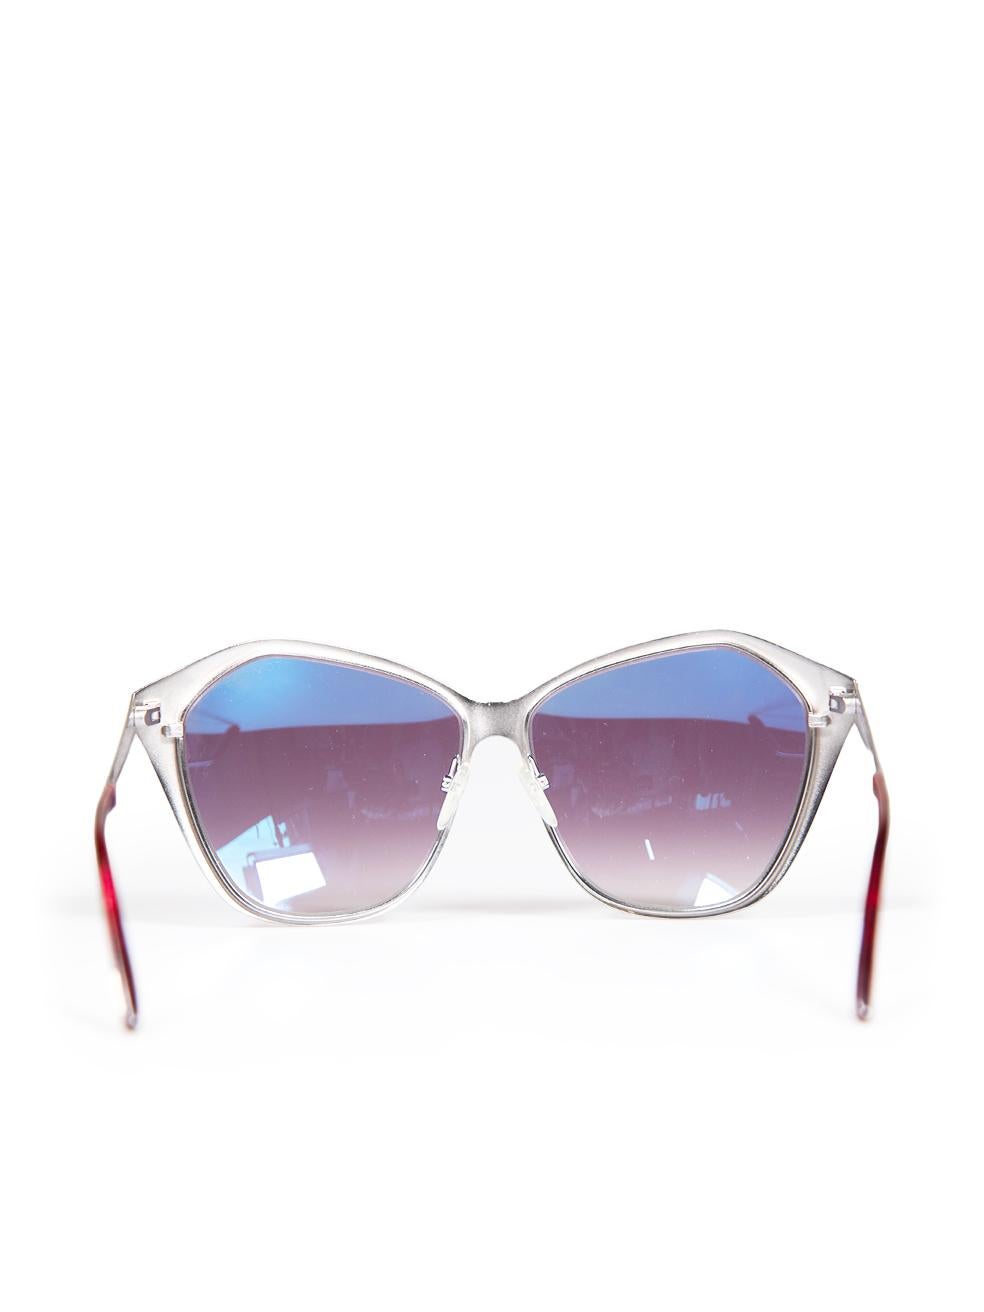 Women's Tom Ford Lena 58 mm Shiny Bordeaux Sunglasses For Sale